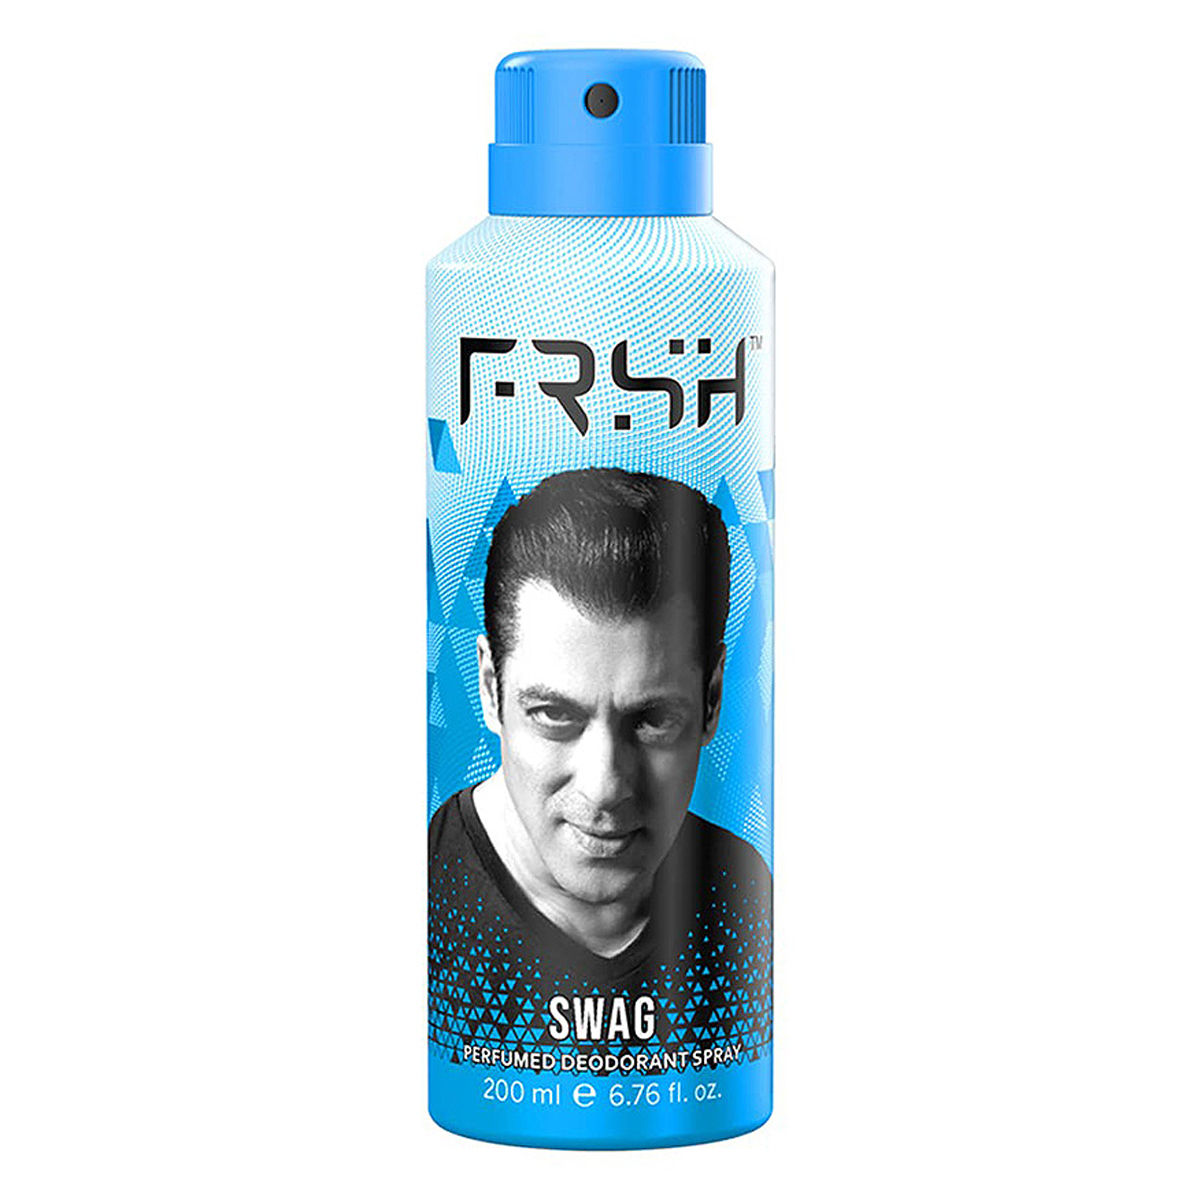 Buy Frsh Swag Perfumed Deodorant Body Spray, 200 ml Online